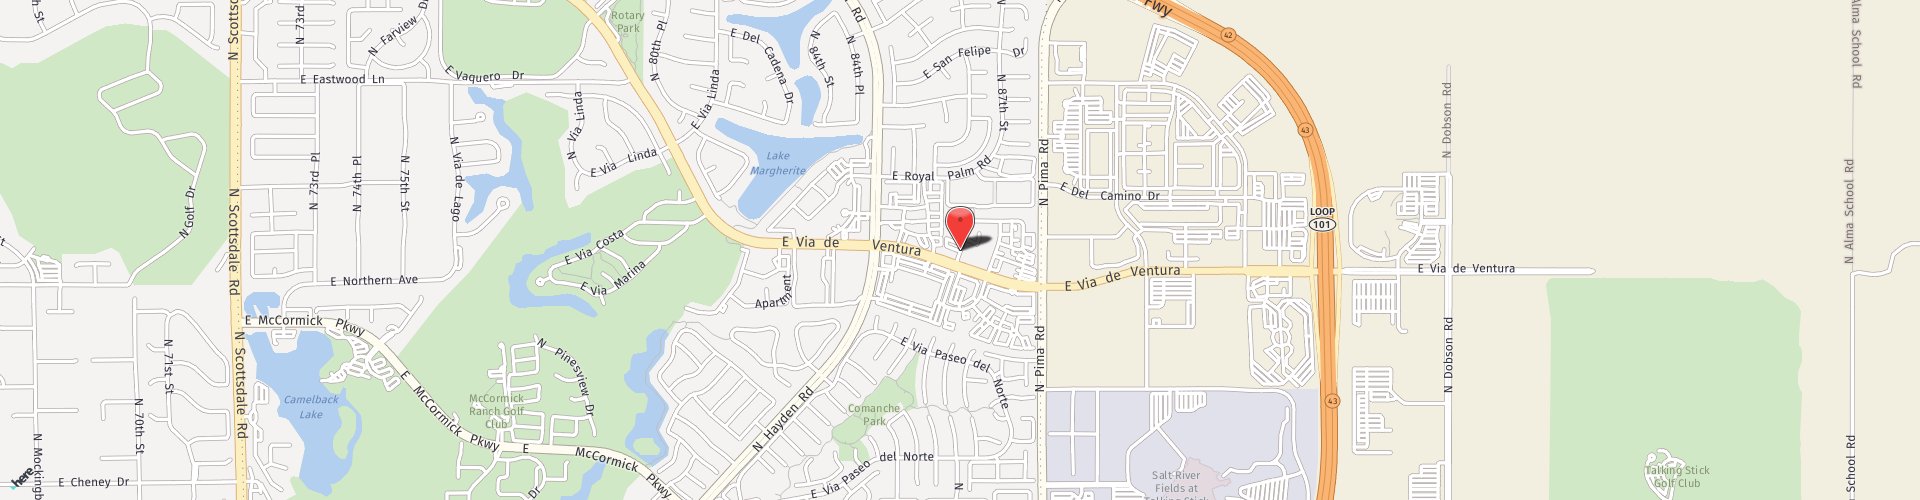 Location Map: 8700 East Vía de Ventura Scottsdale, AZ 85258